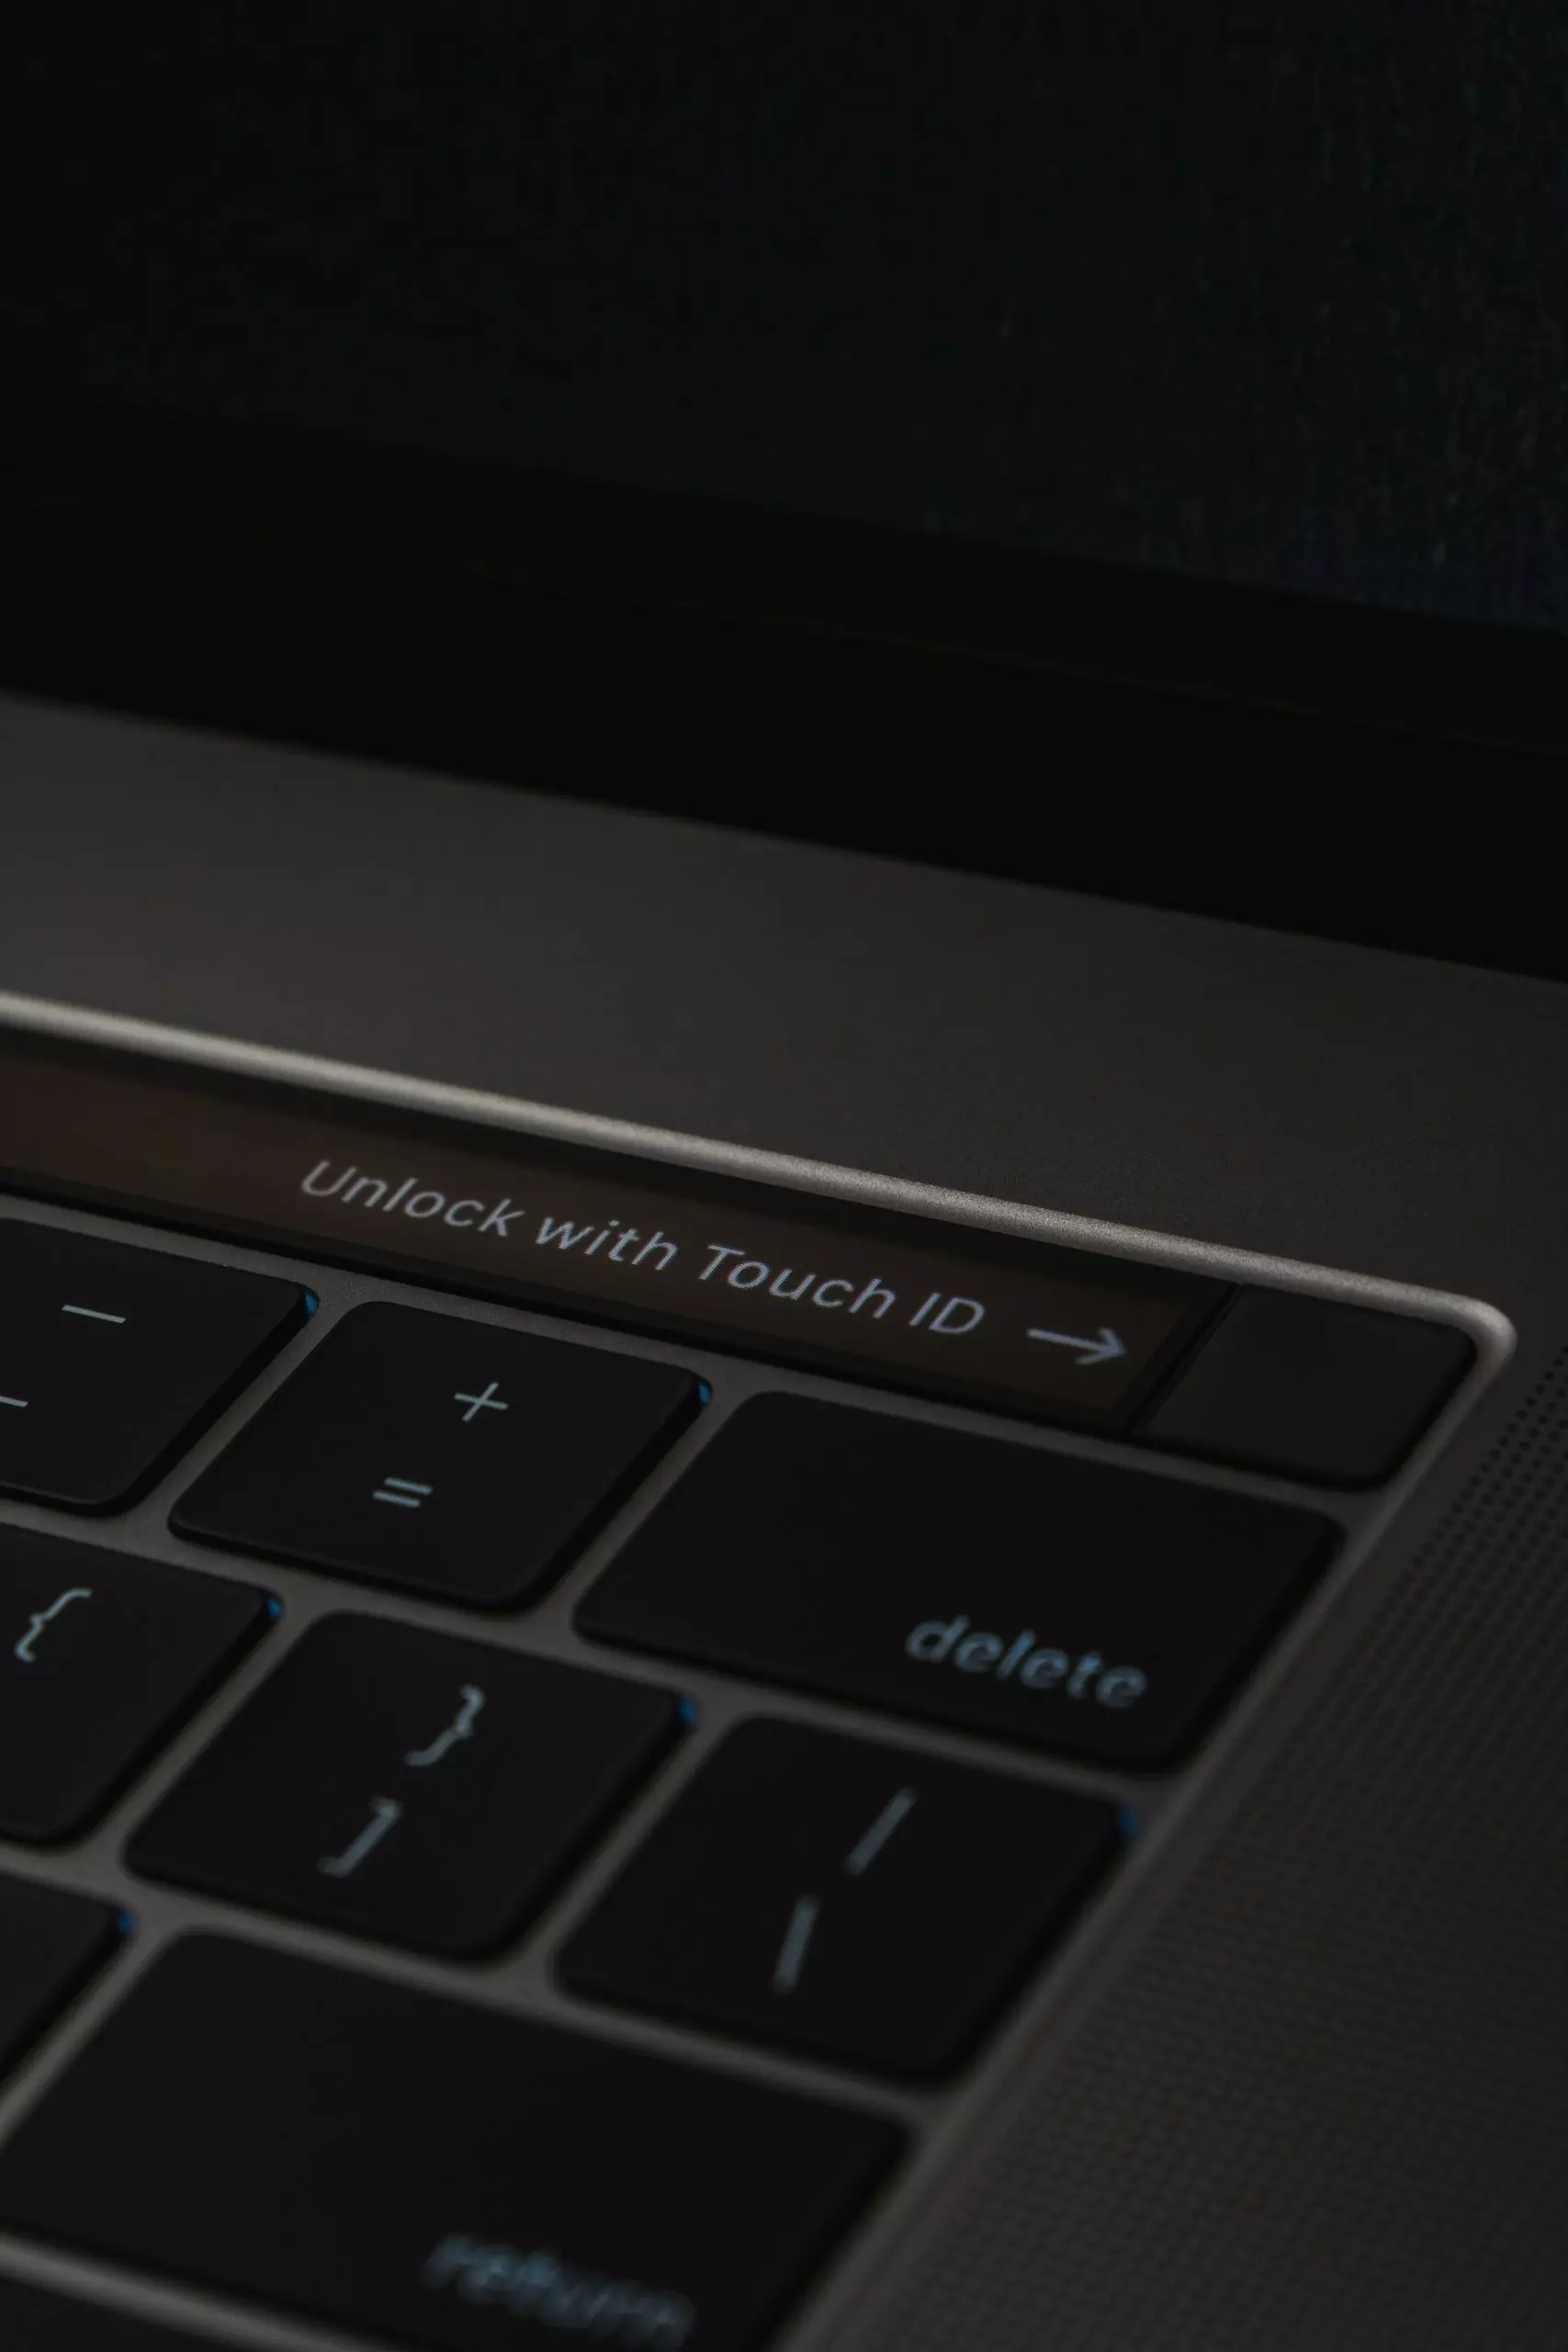 The unlock button on a Mac keyboard